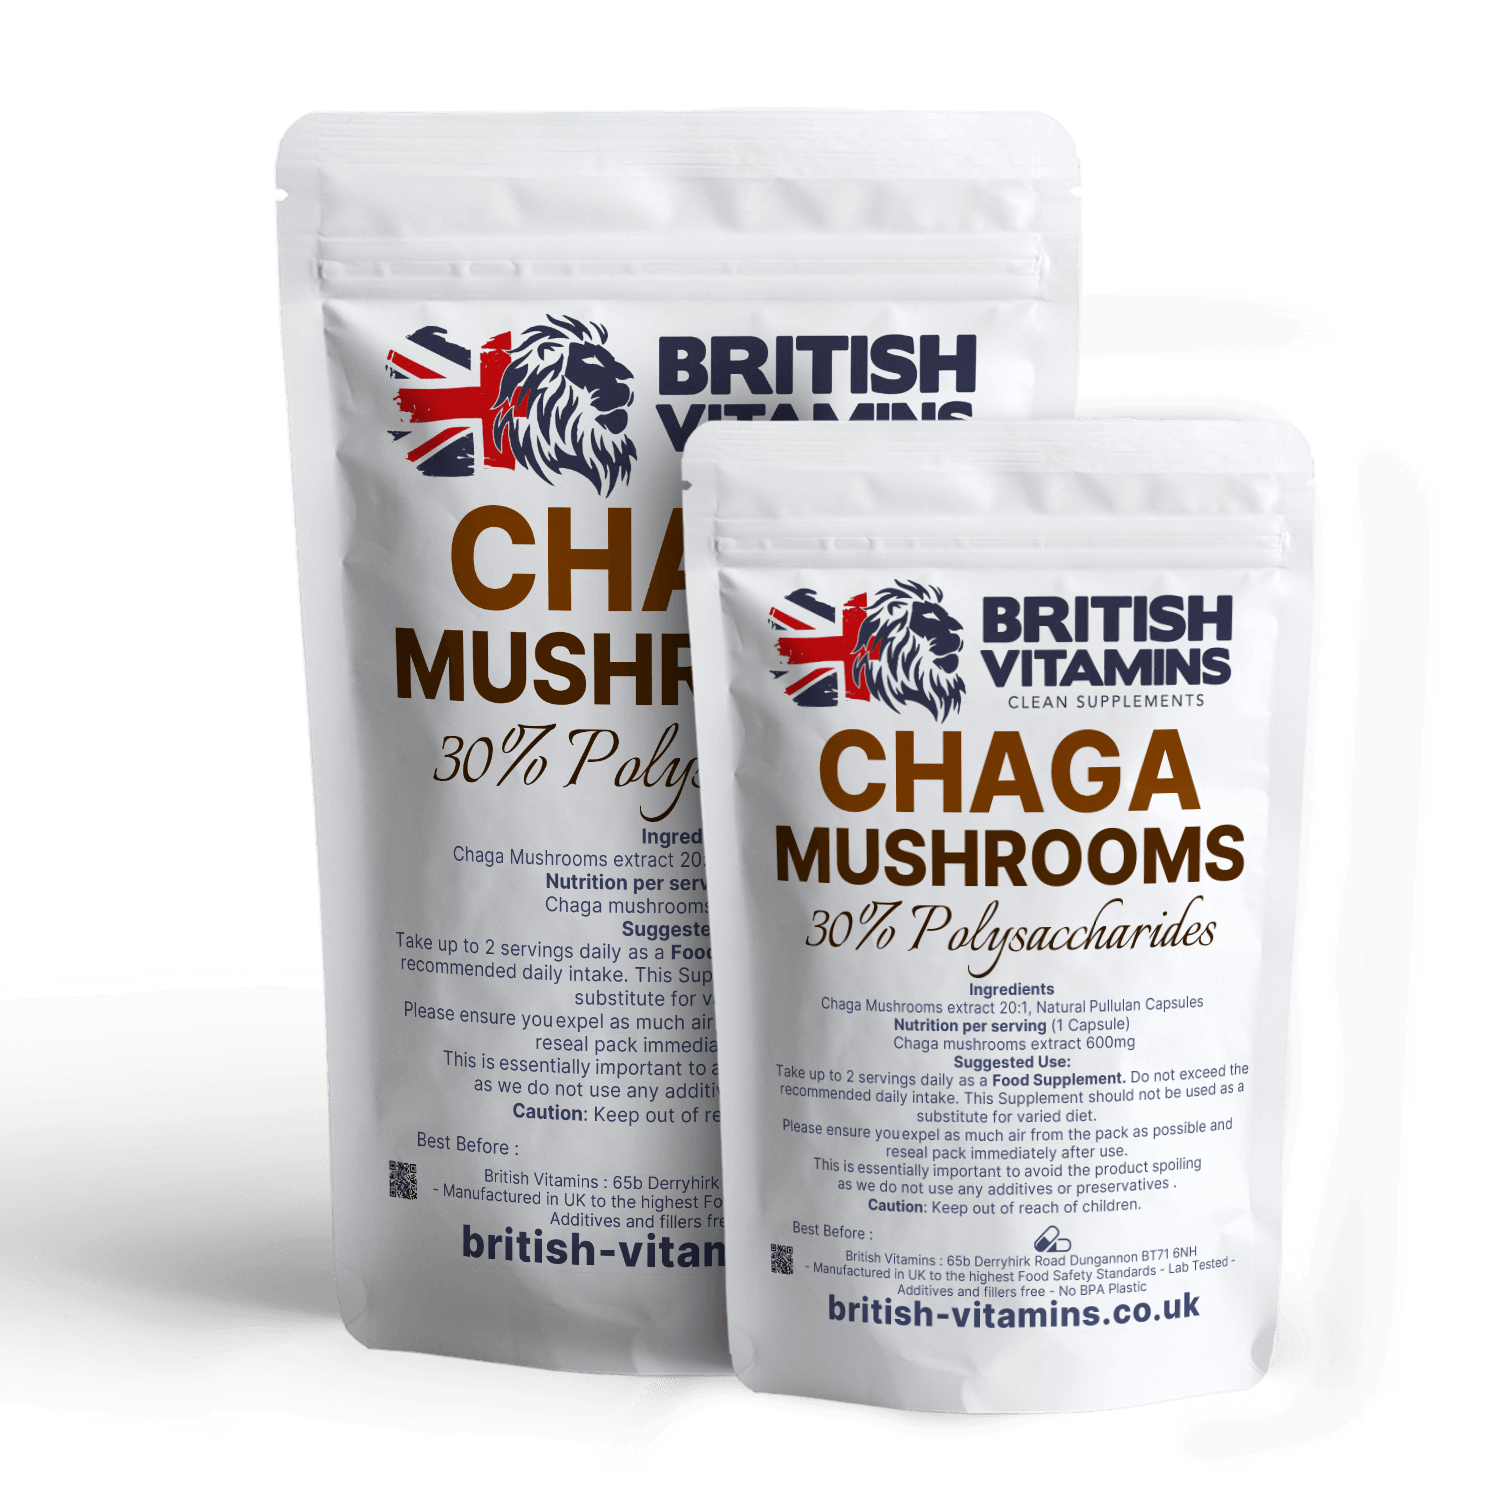 Chaga Mushroom extract 30%Polysacharides 20% Beta Glucans Health & Beauty:Vitamins & Lifestyle Supplements:Vitamins & Minerals British Vitamins   